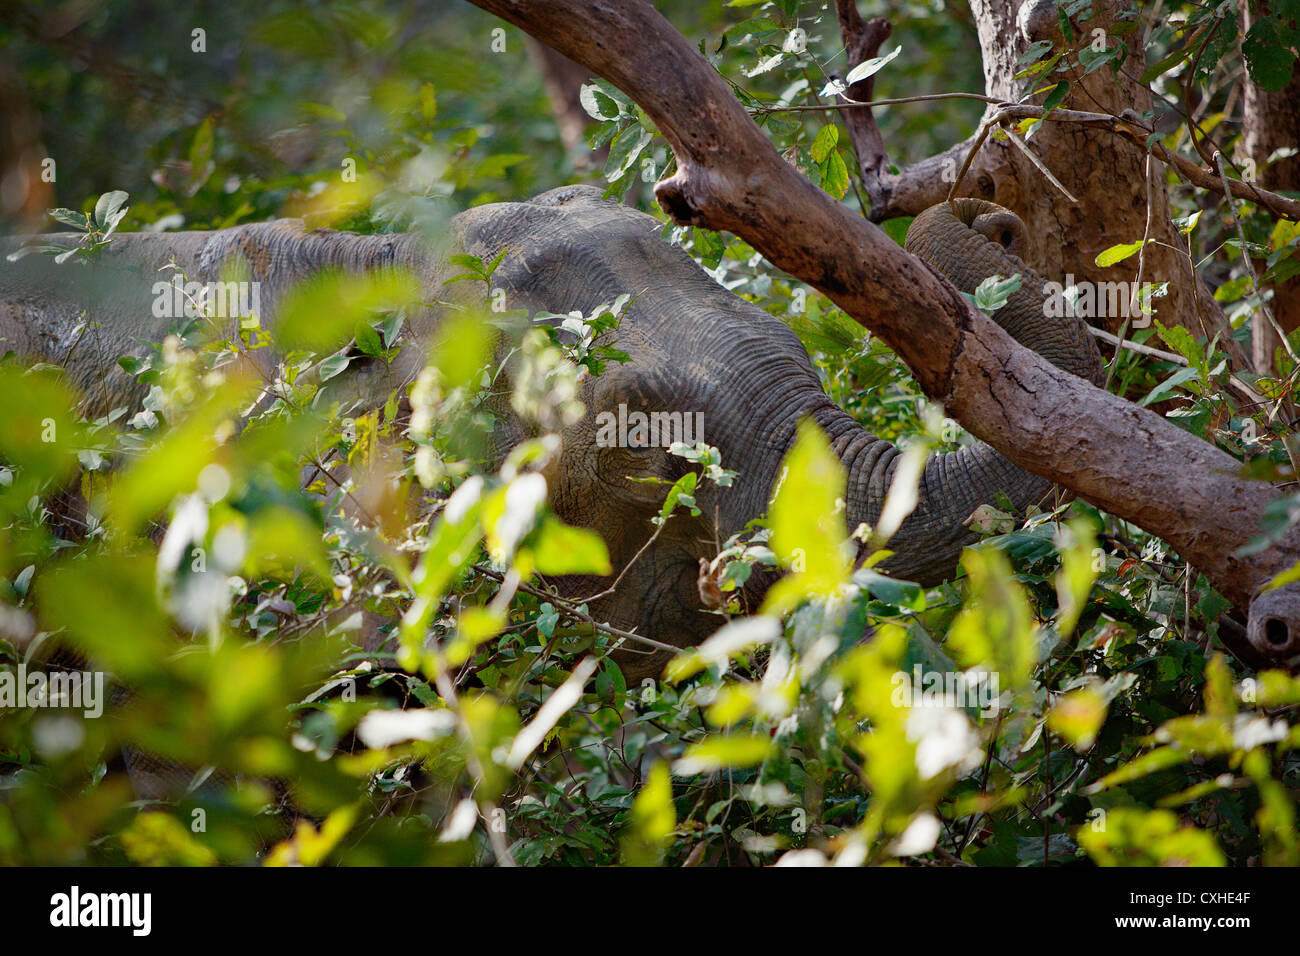 Wild elephant feeding in Bijrani area in Jim Corbett Tiger Reserve, India. Stock Photo